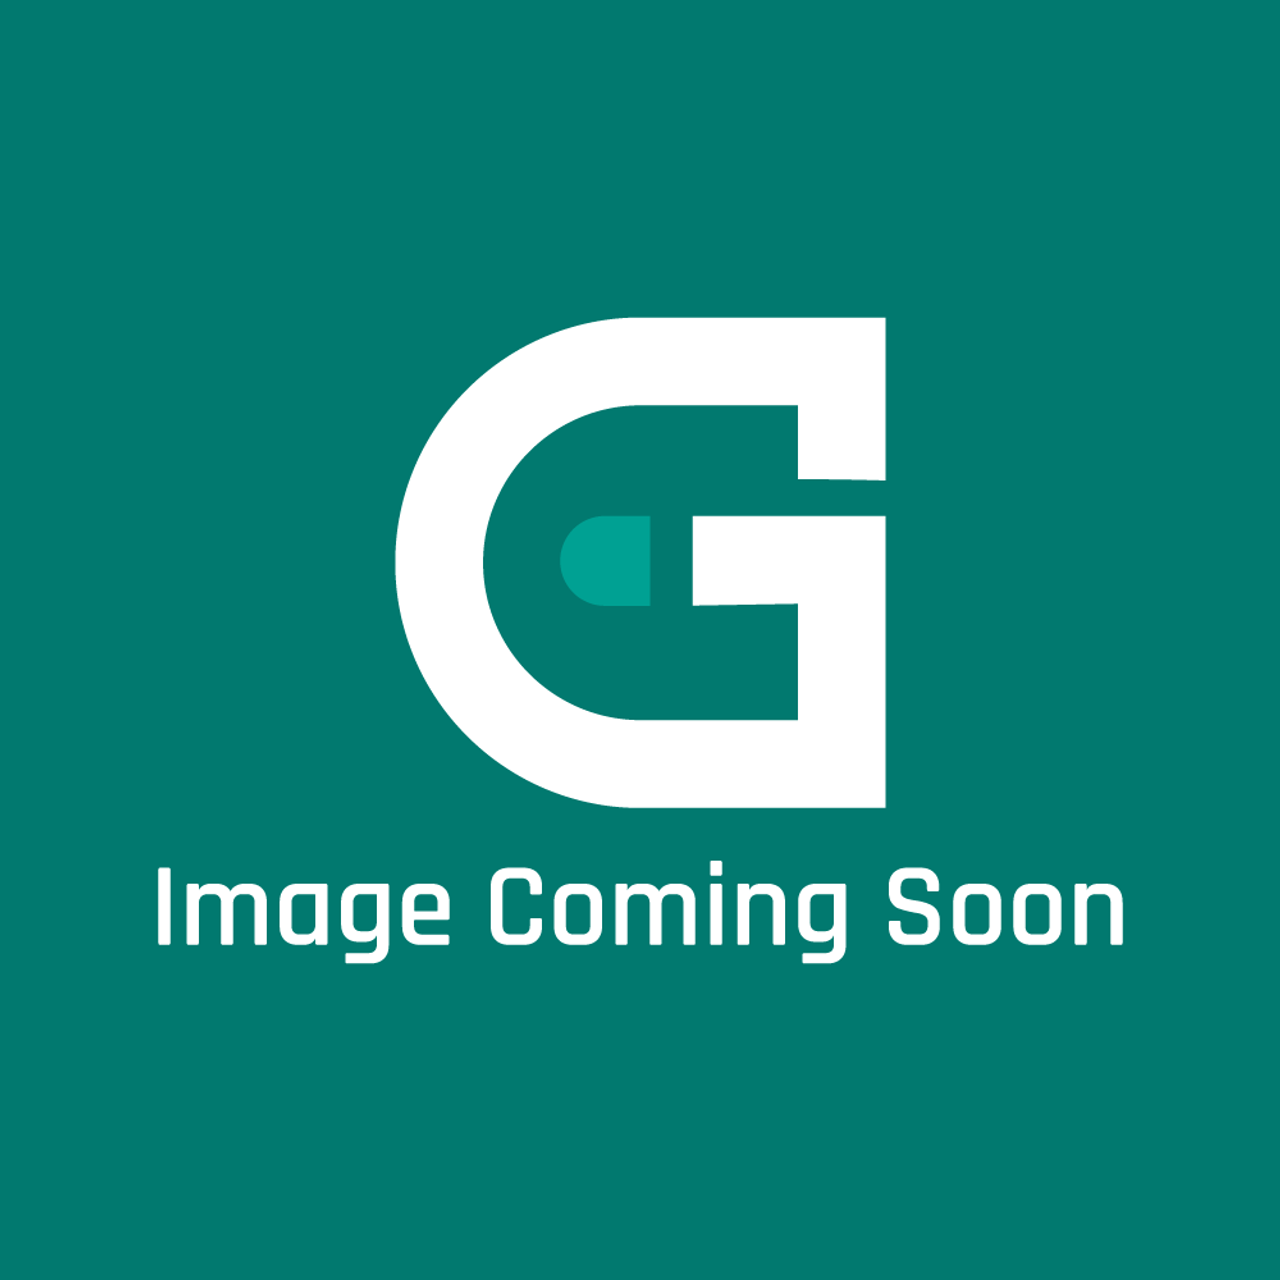 Garland G02488-2 - Pilot 4C-2 Propane - Image Coming Soon!